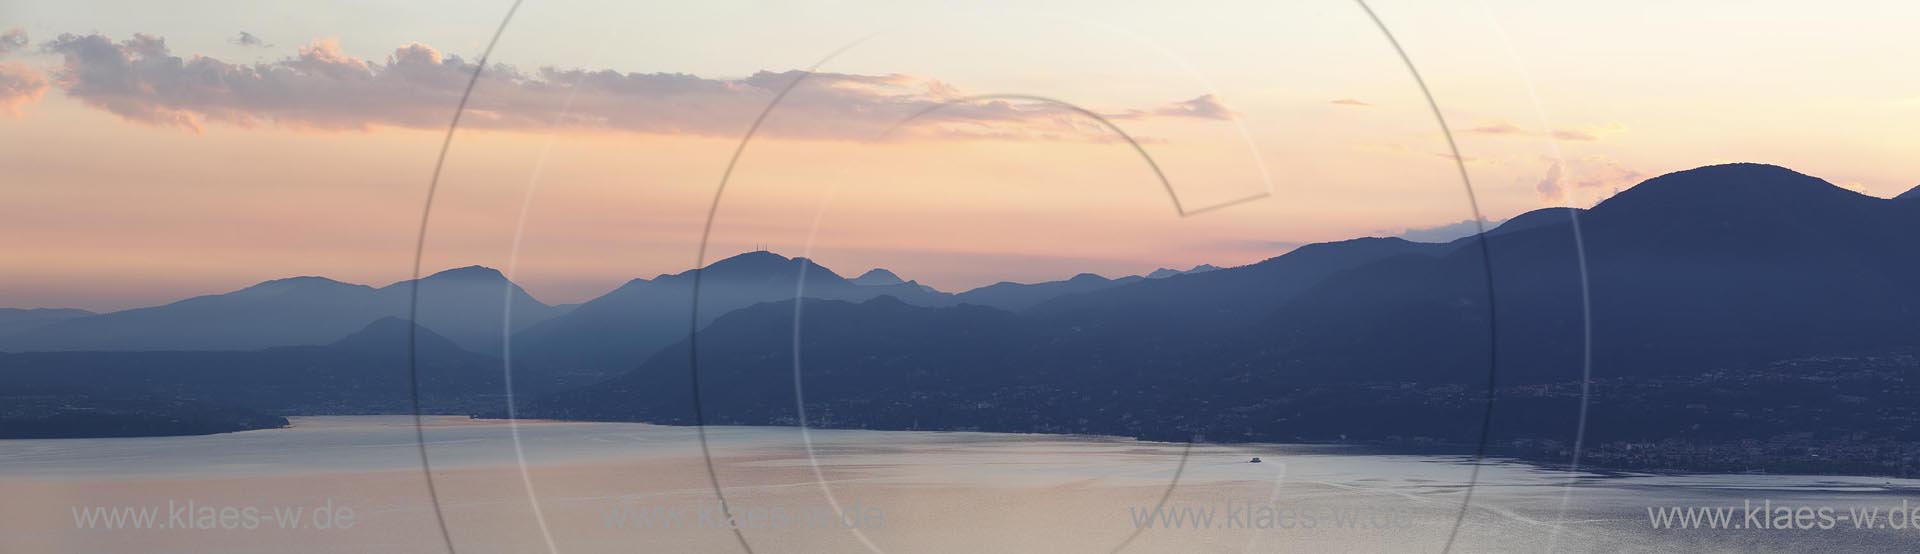 Torri del Benaco Albisano, Panoramablick von Albisano ueber den See in Abendstimmung; Torri del Benaco Albisano, panoramview from Albisano over Lake Garde in sunset light